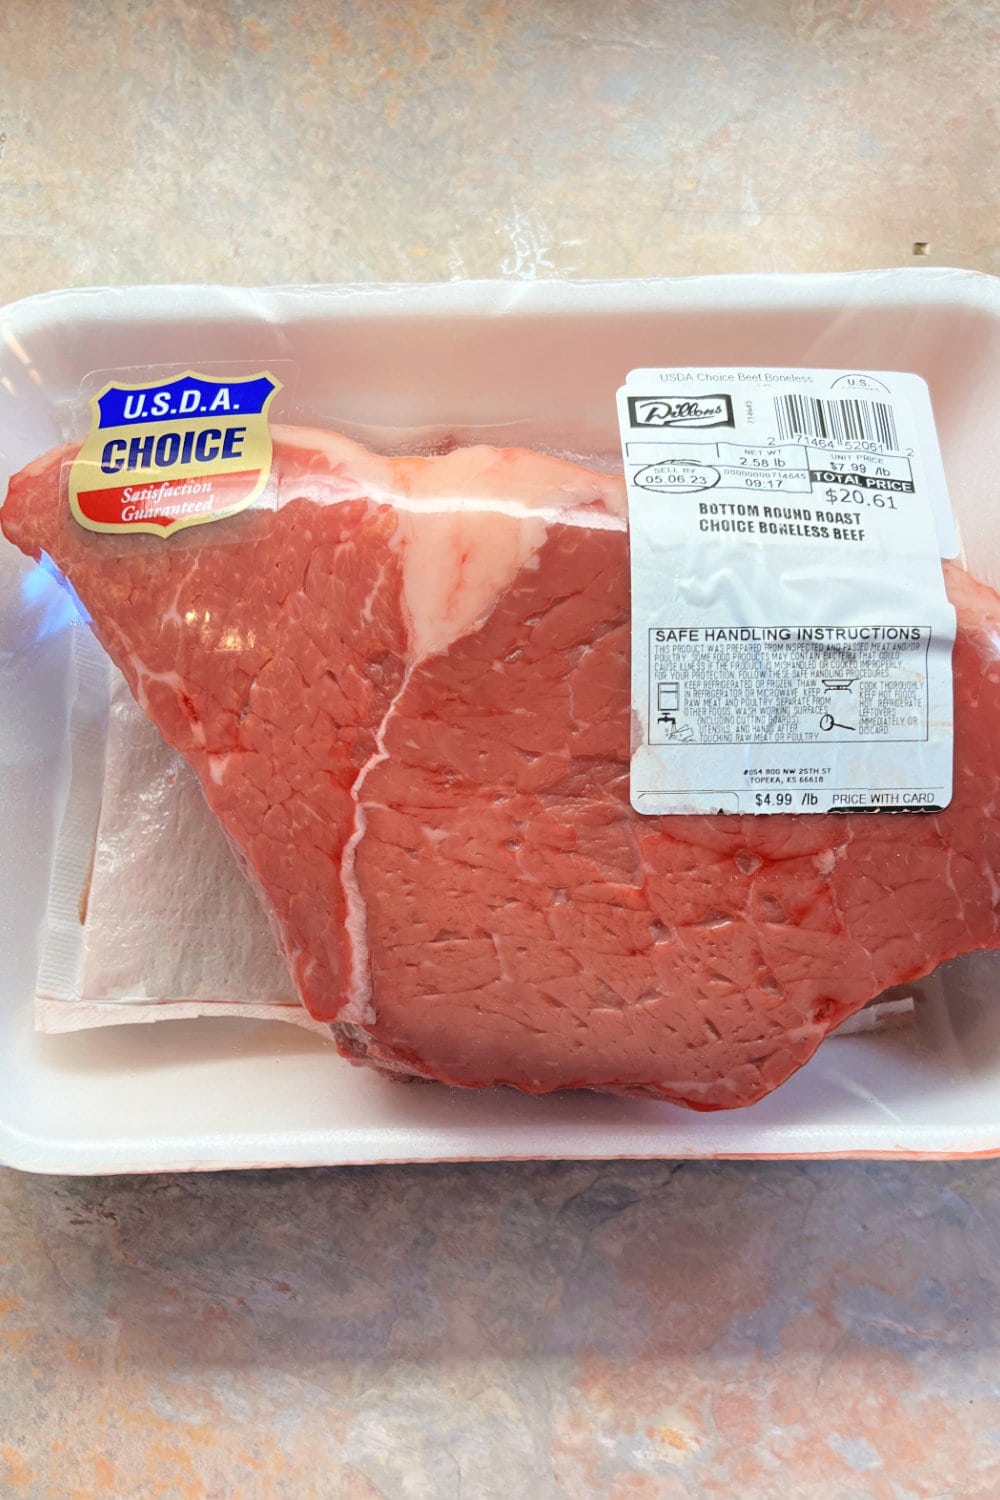 Bottom round roast in meat packaging. 